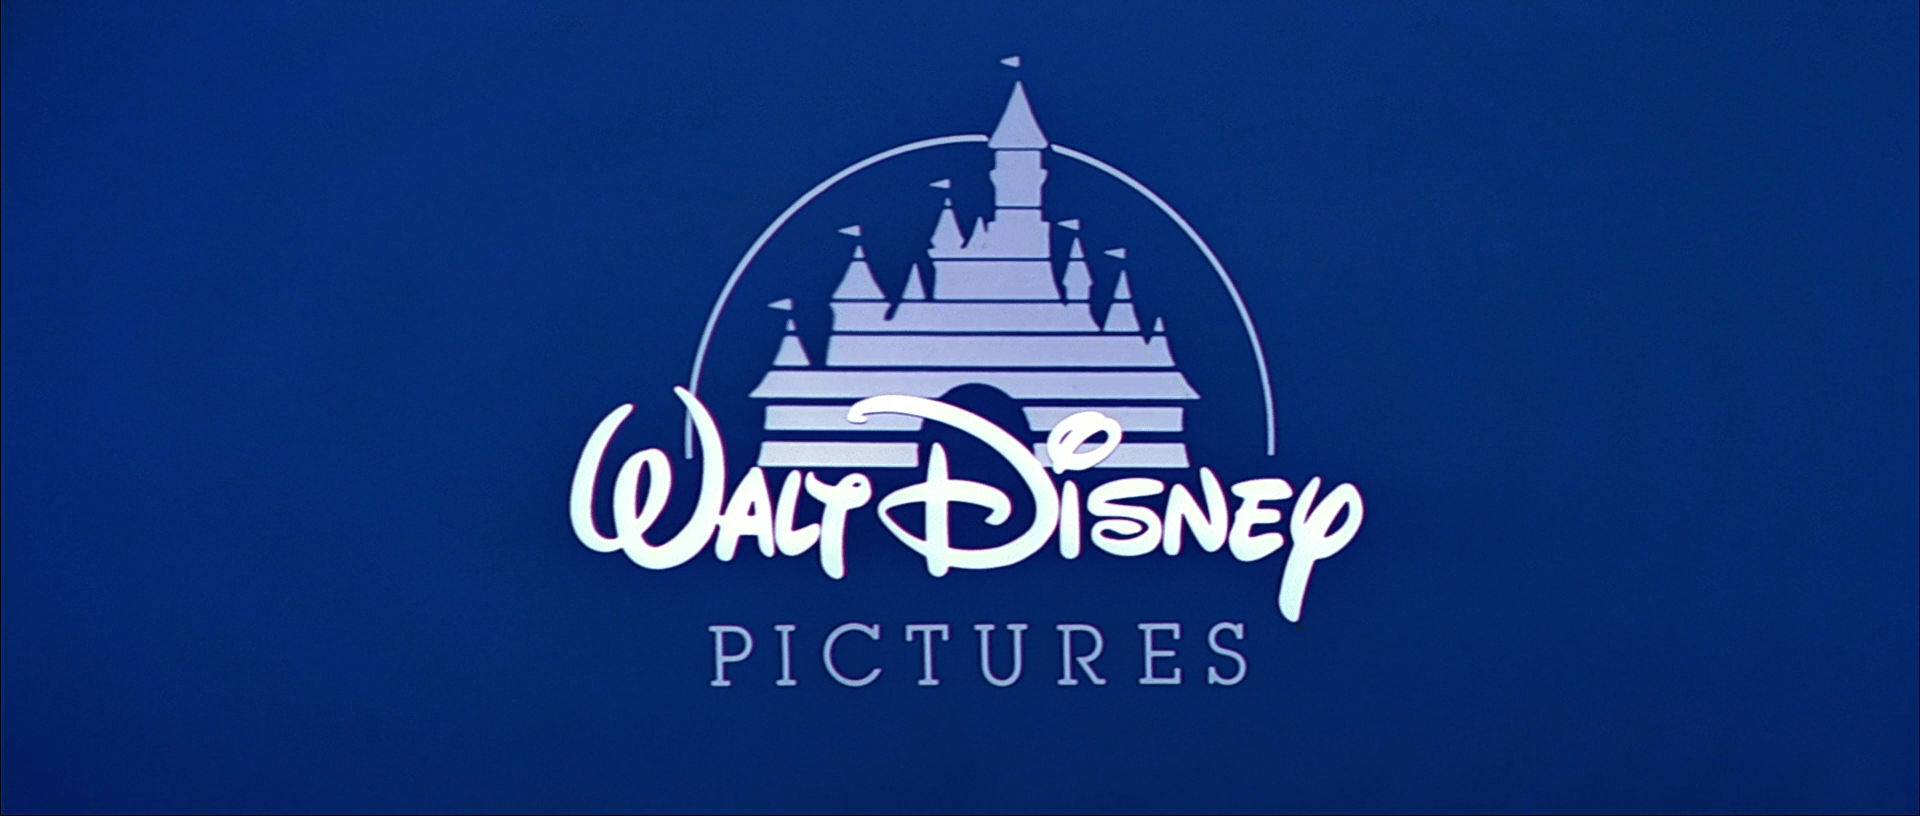 Walt Disney Pictures Presents Logo - Walt Disney Picture Closing Variants